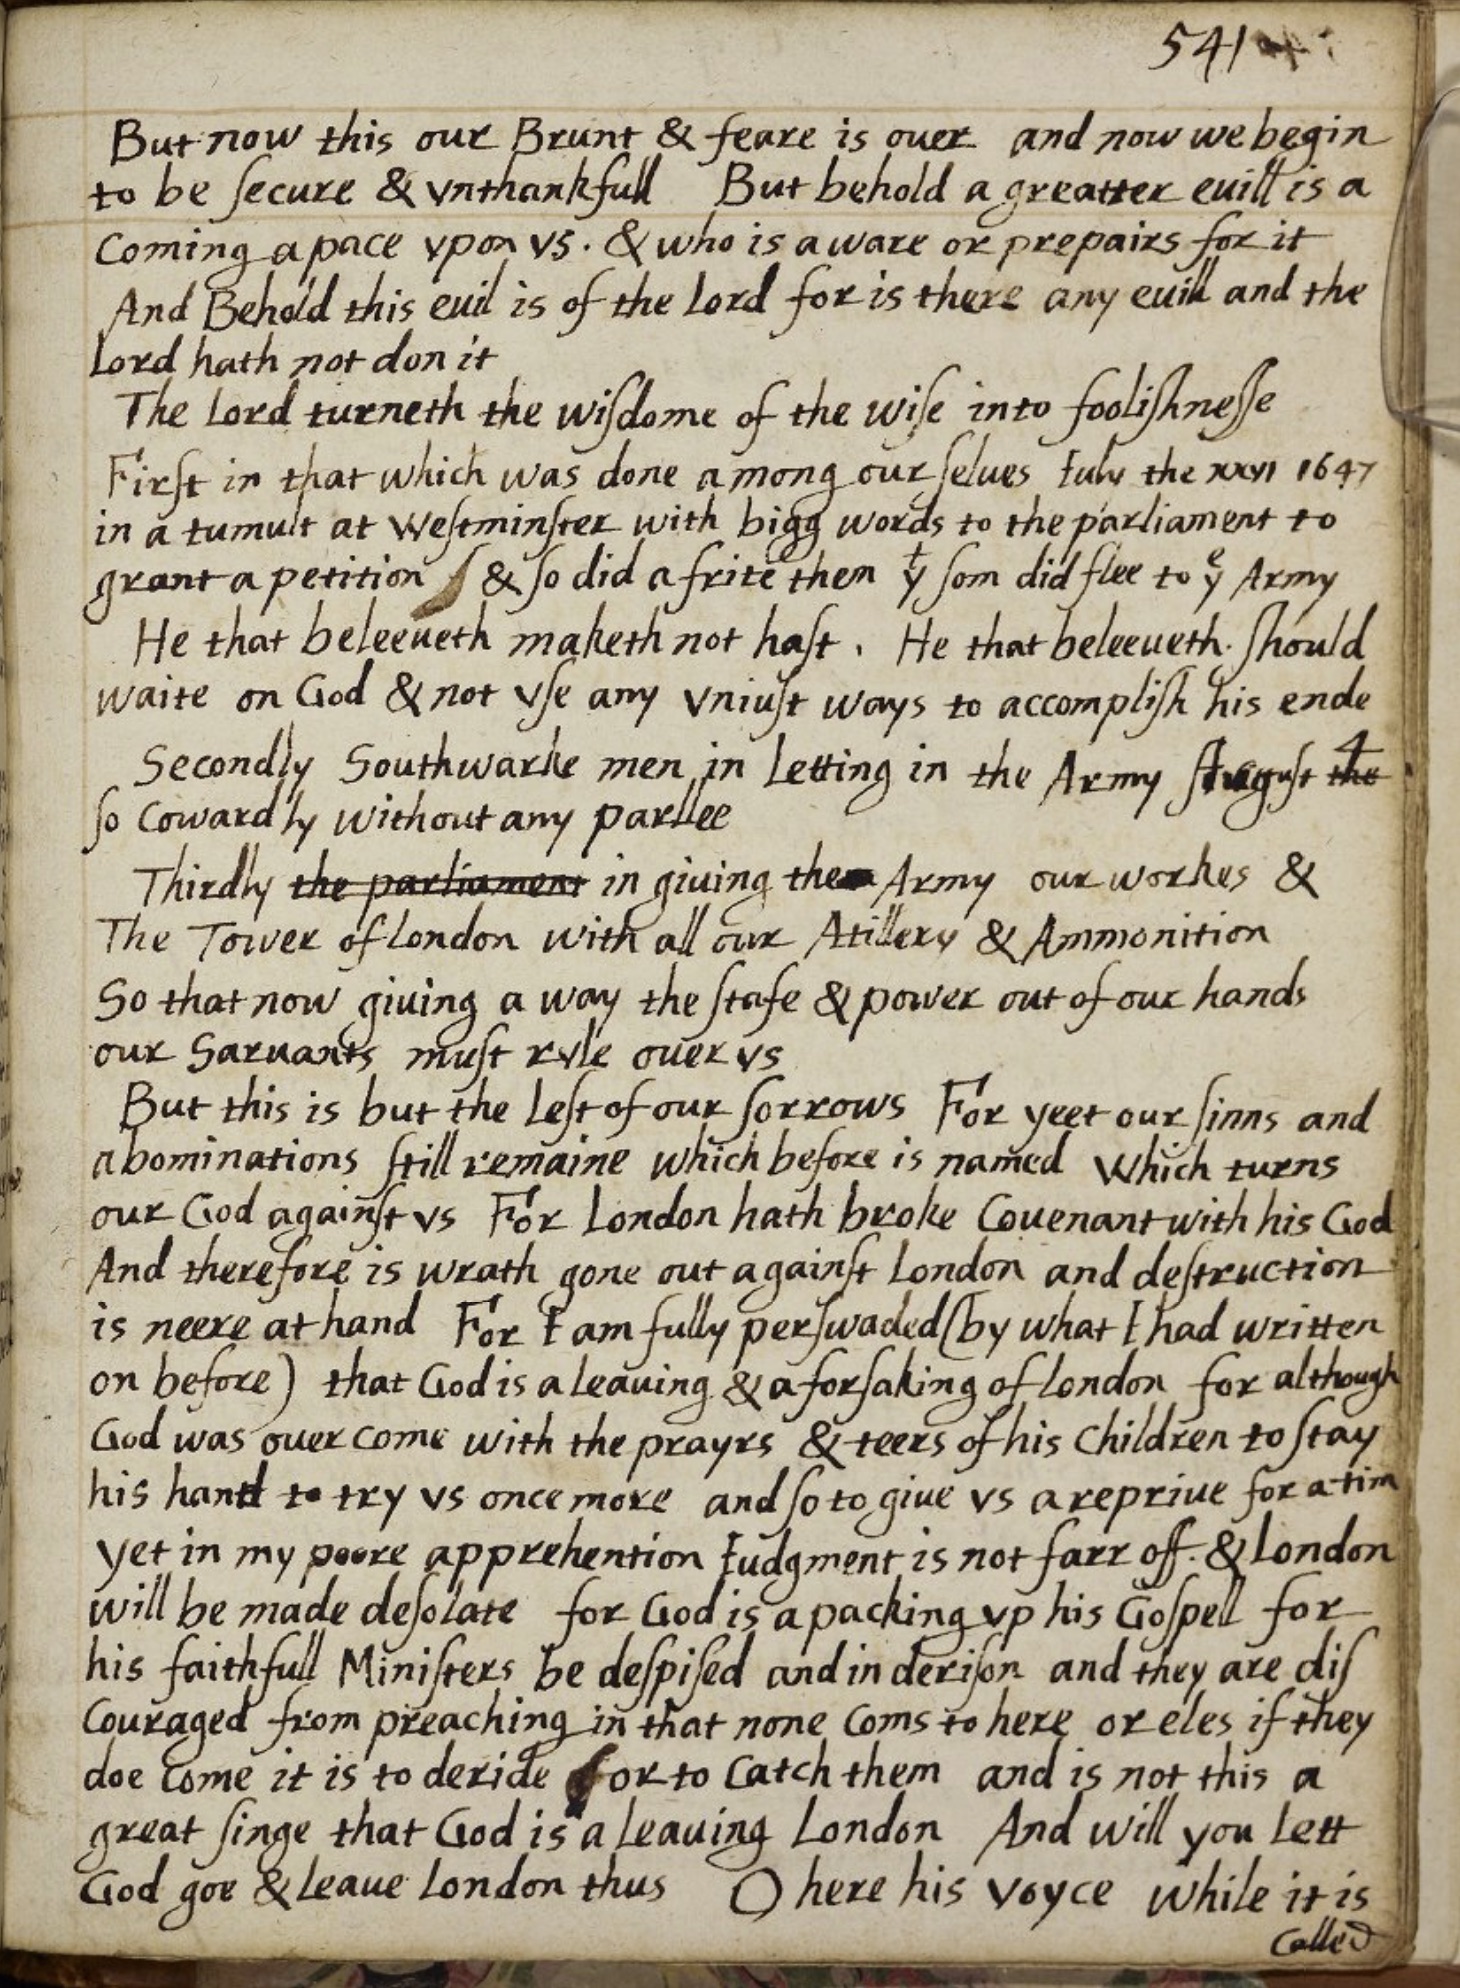 Manuscript of "A Greater Evil" by Nehemiah Wallington.